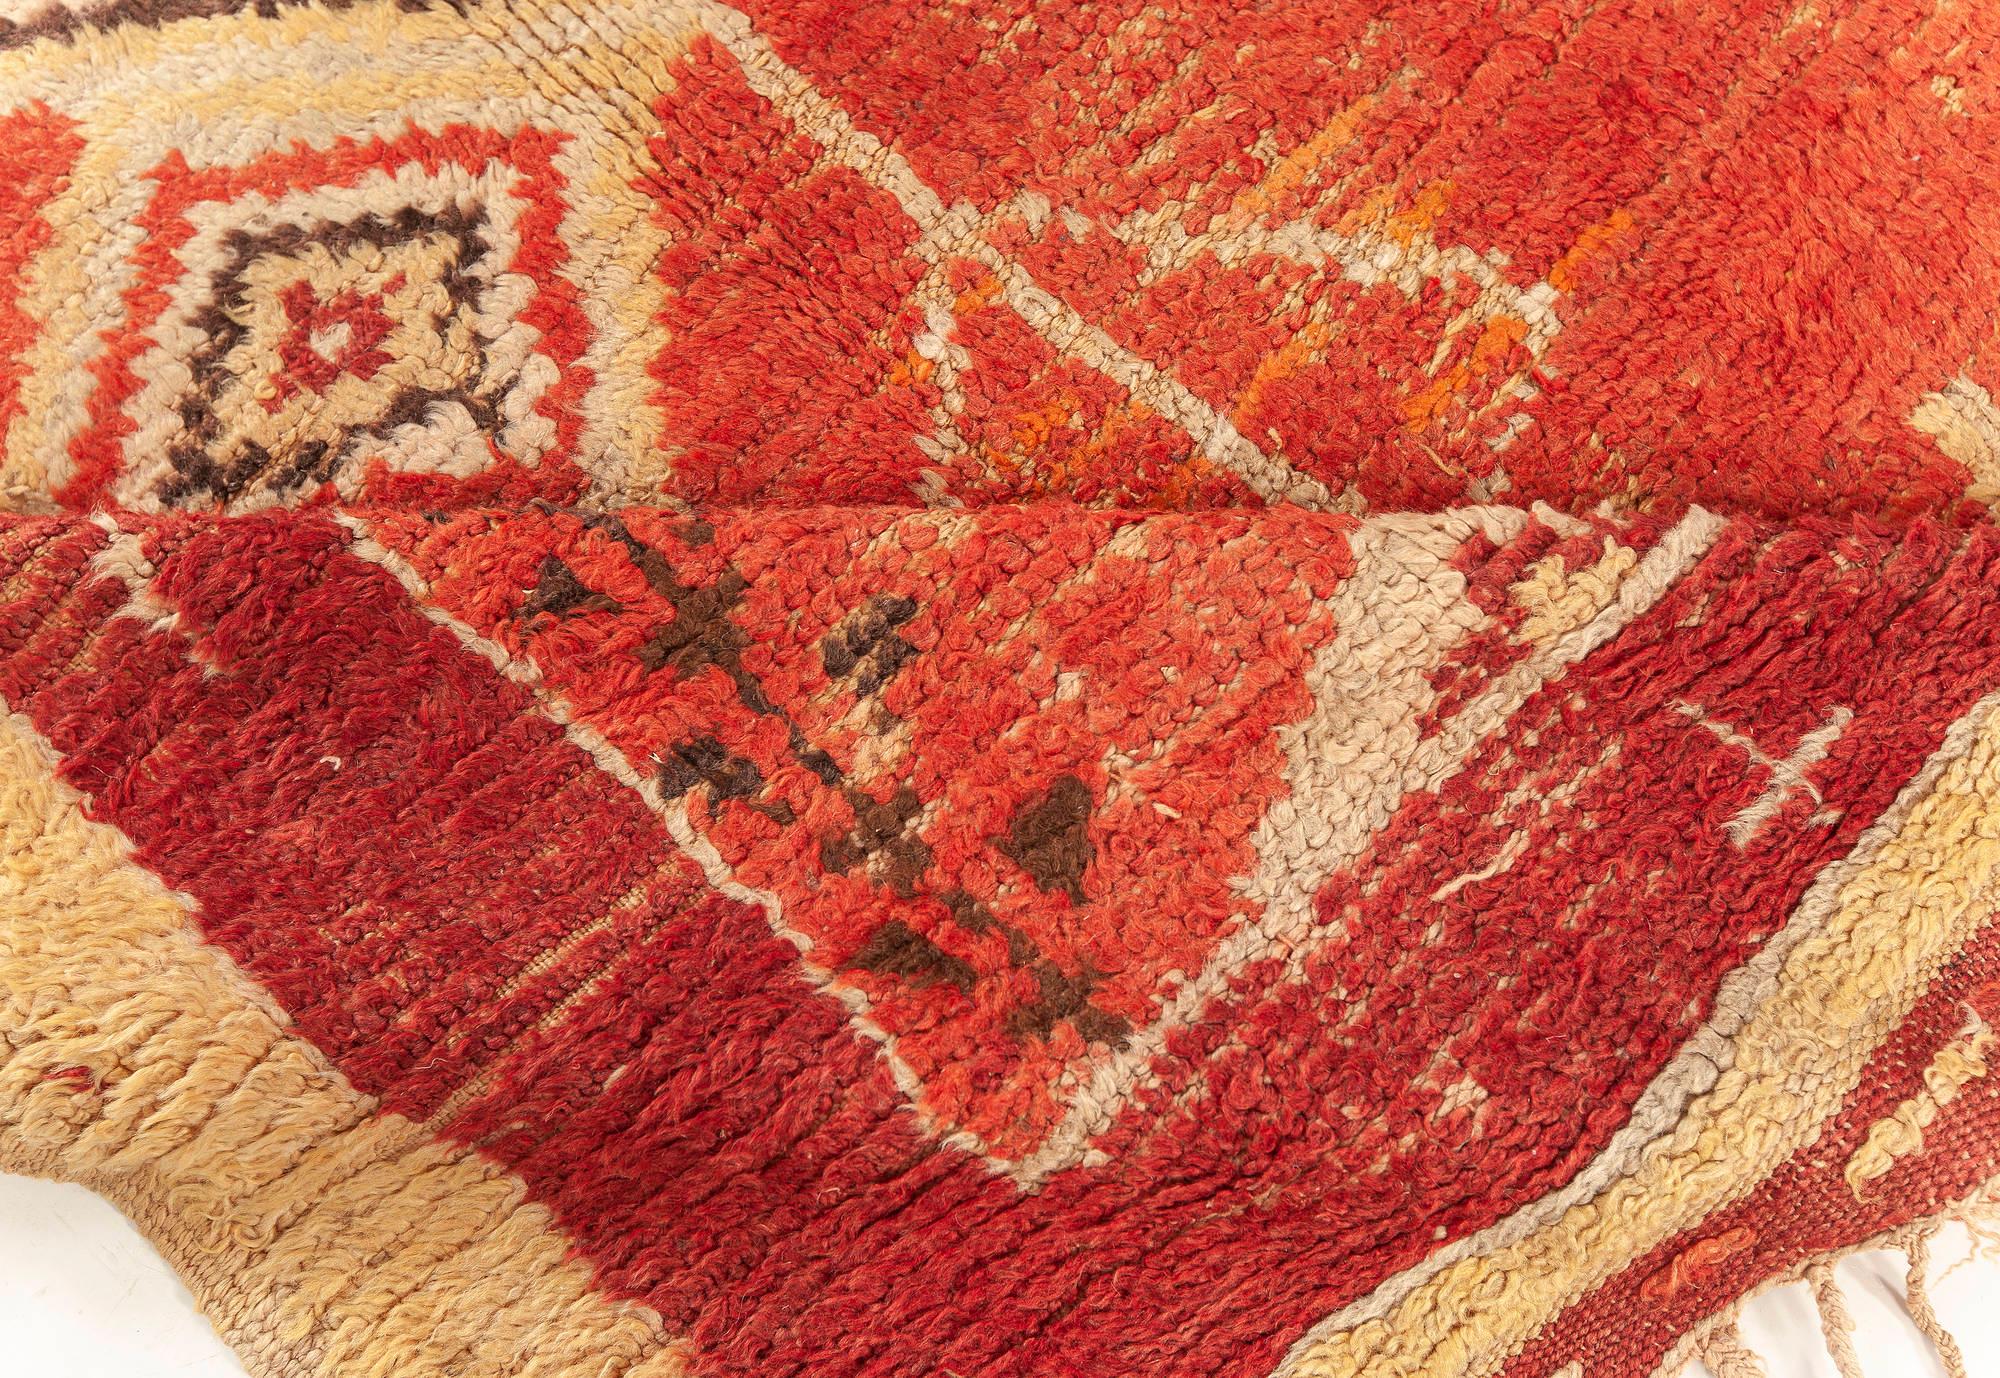 Authentic Tribal Moroccan Handmade Wool Rug
Size: 5'8